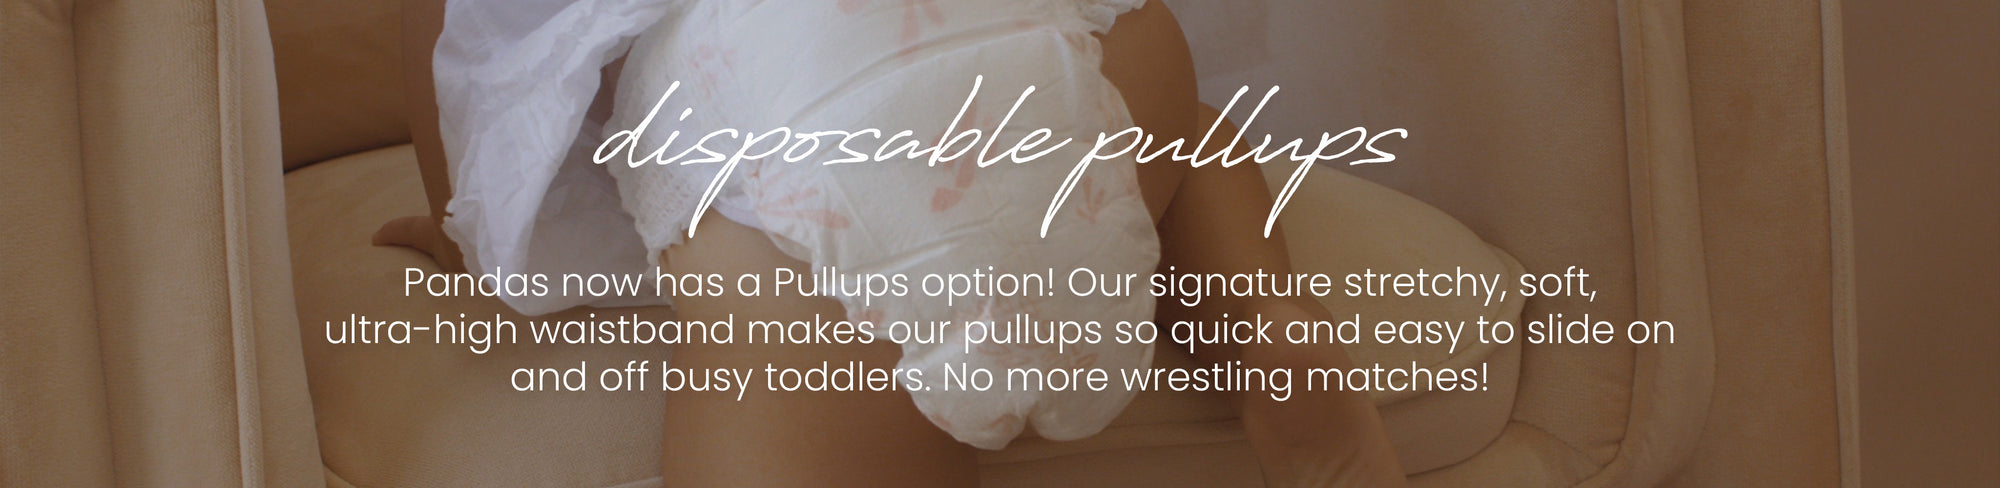 luvme-pandas-pullups-mother-baby-toddler-nappies